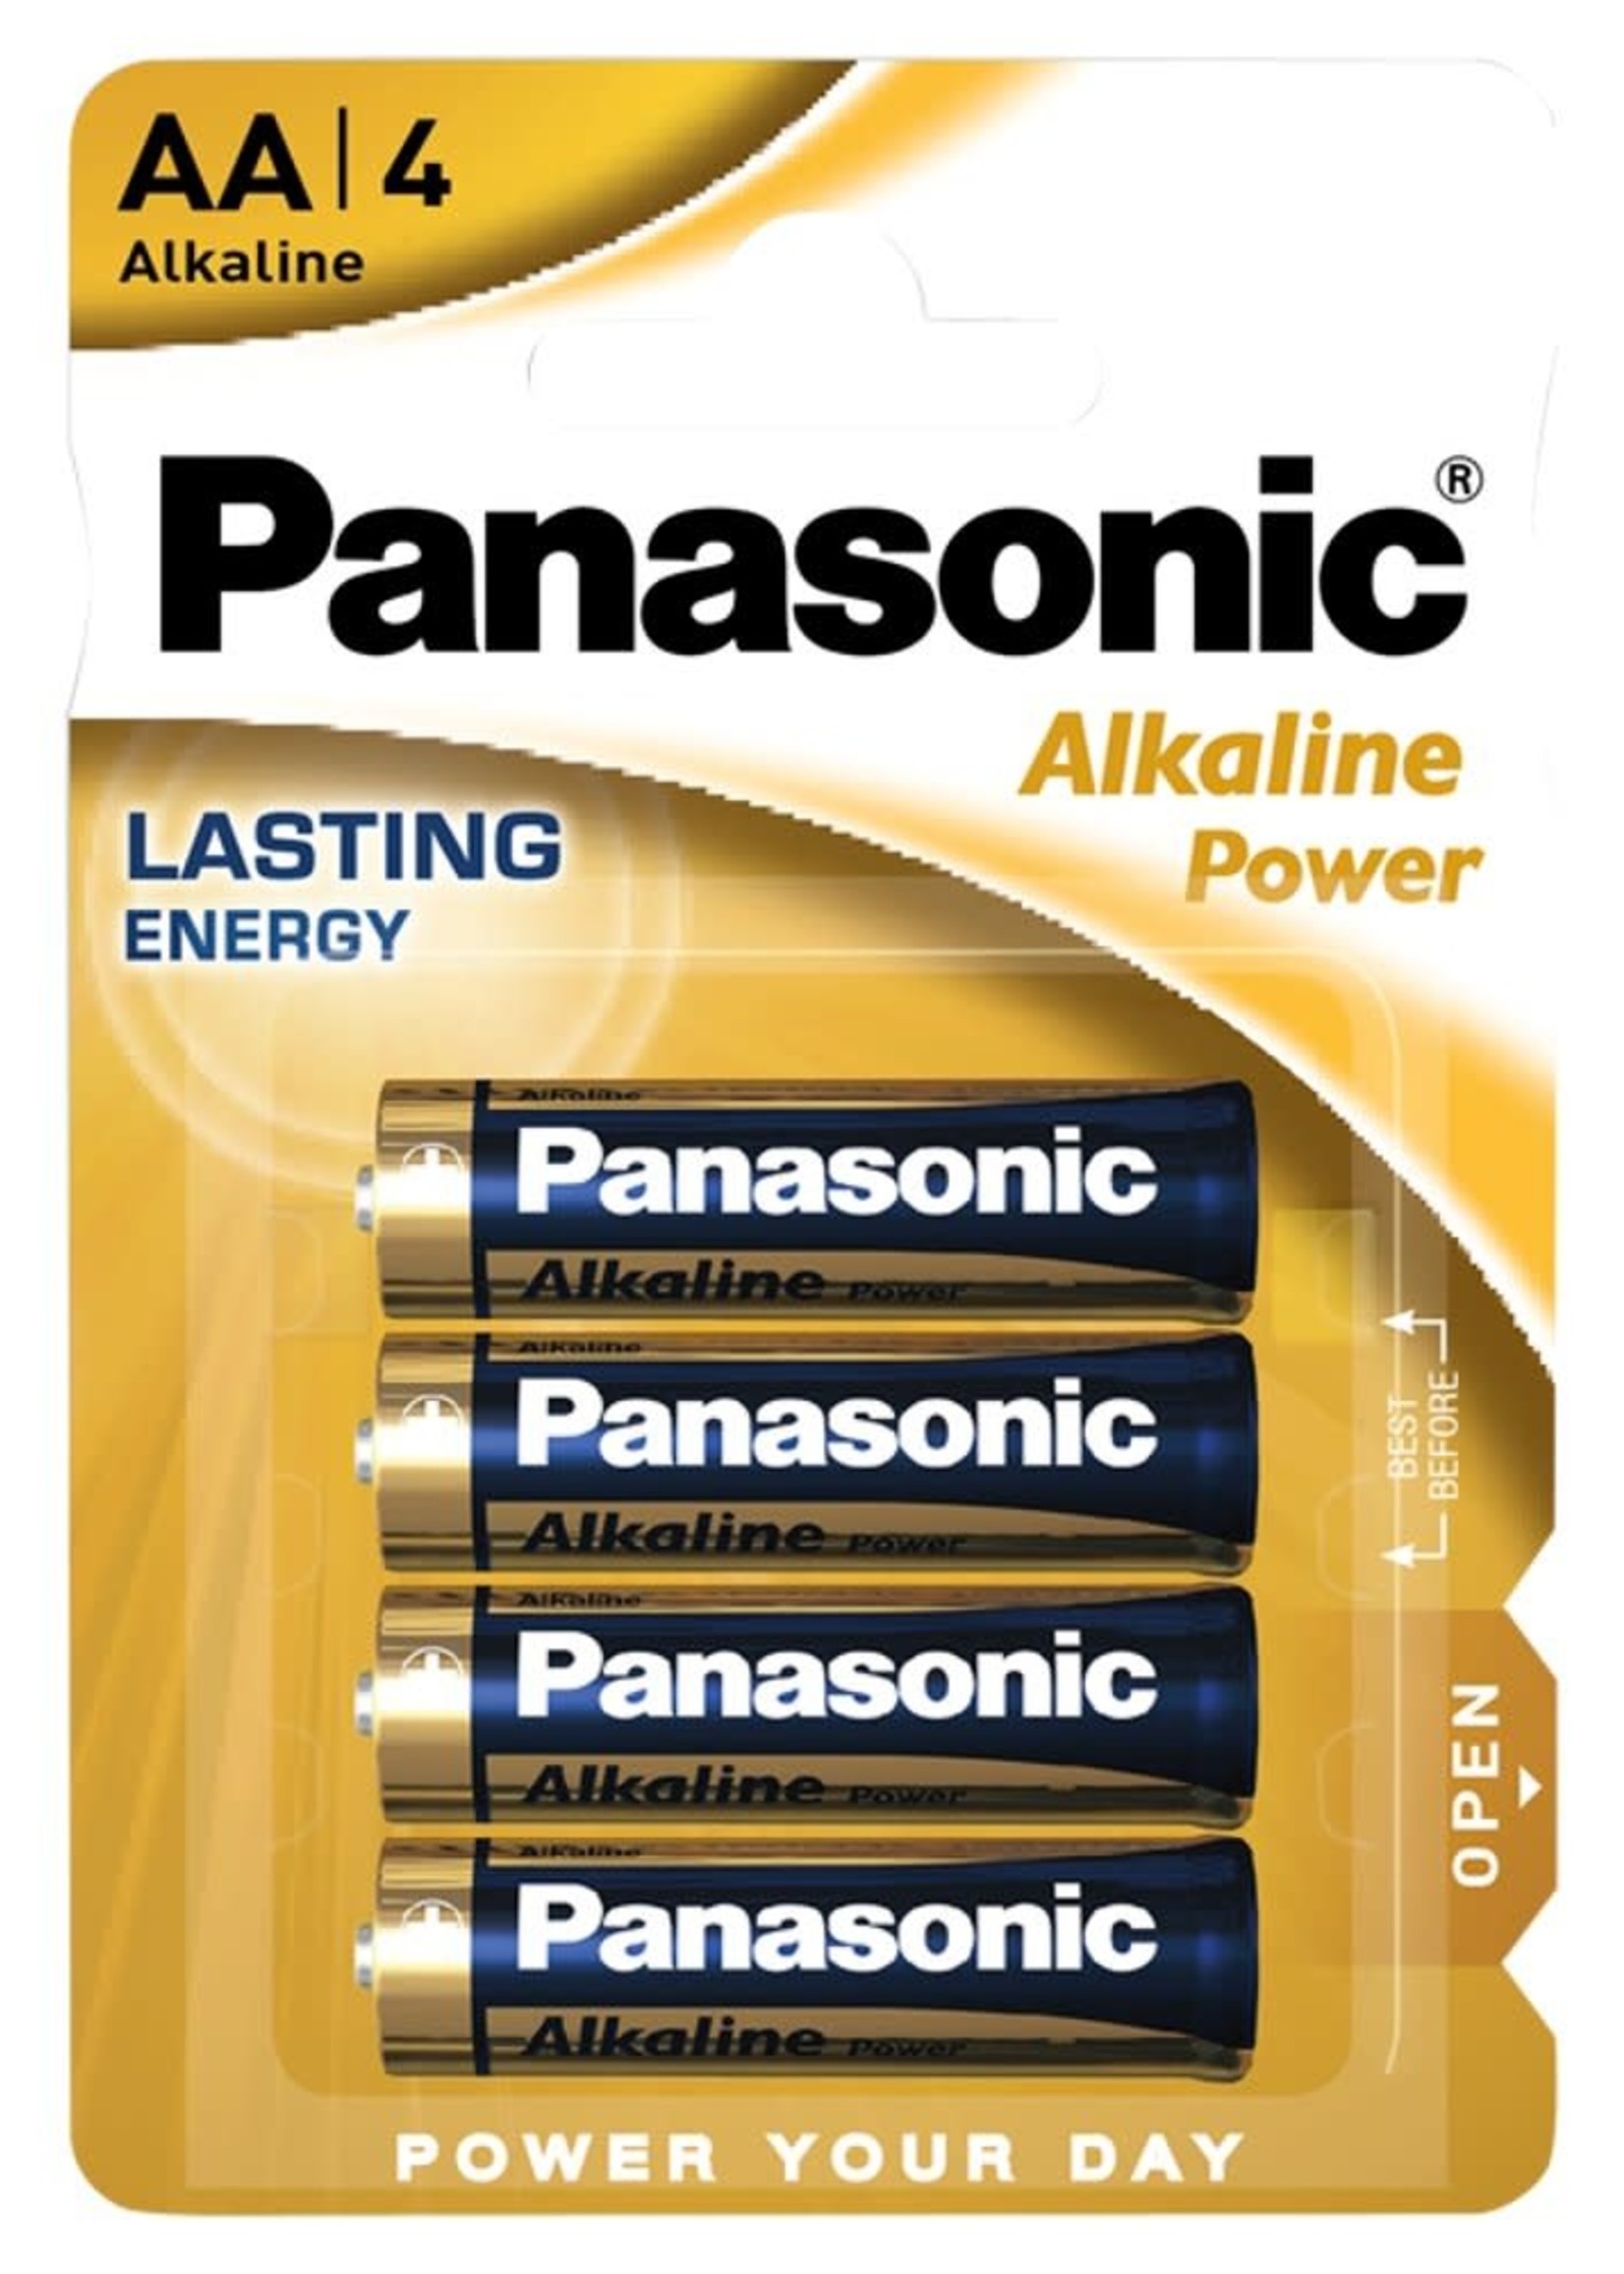 Panasonic Alkaline Power AA Batteries (4 Pack)